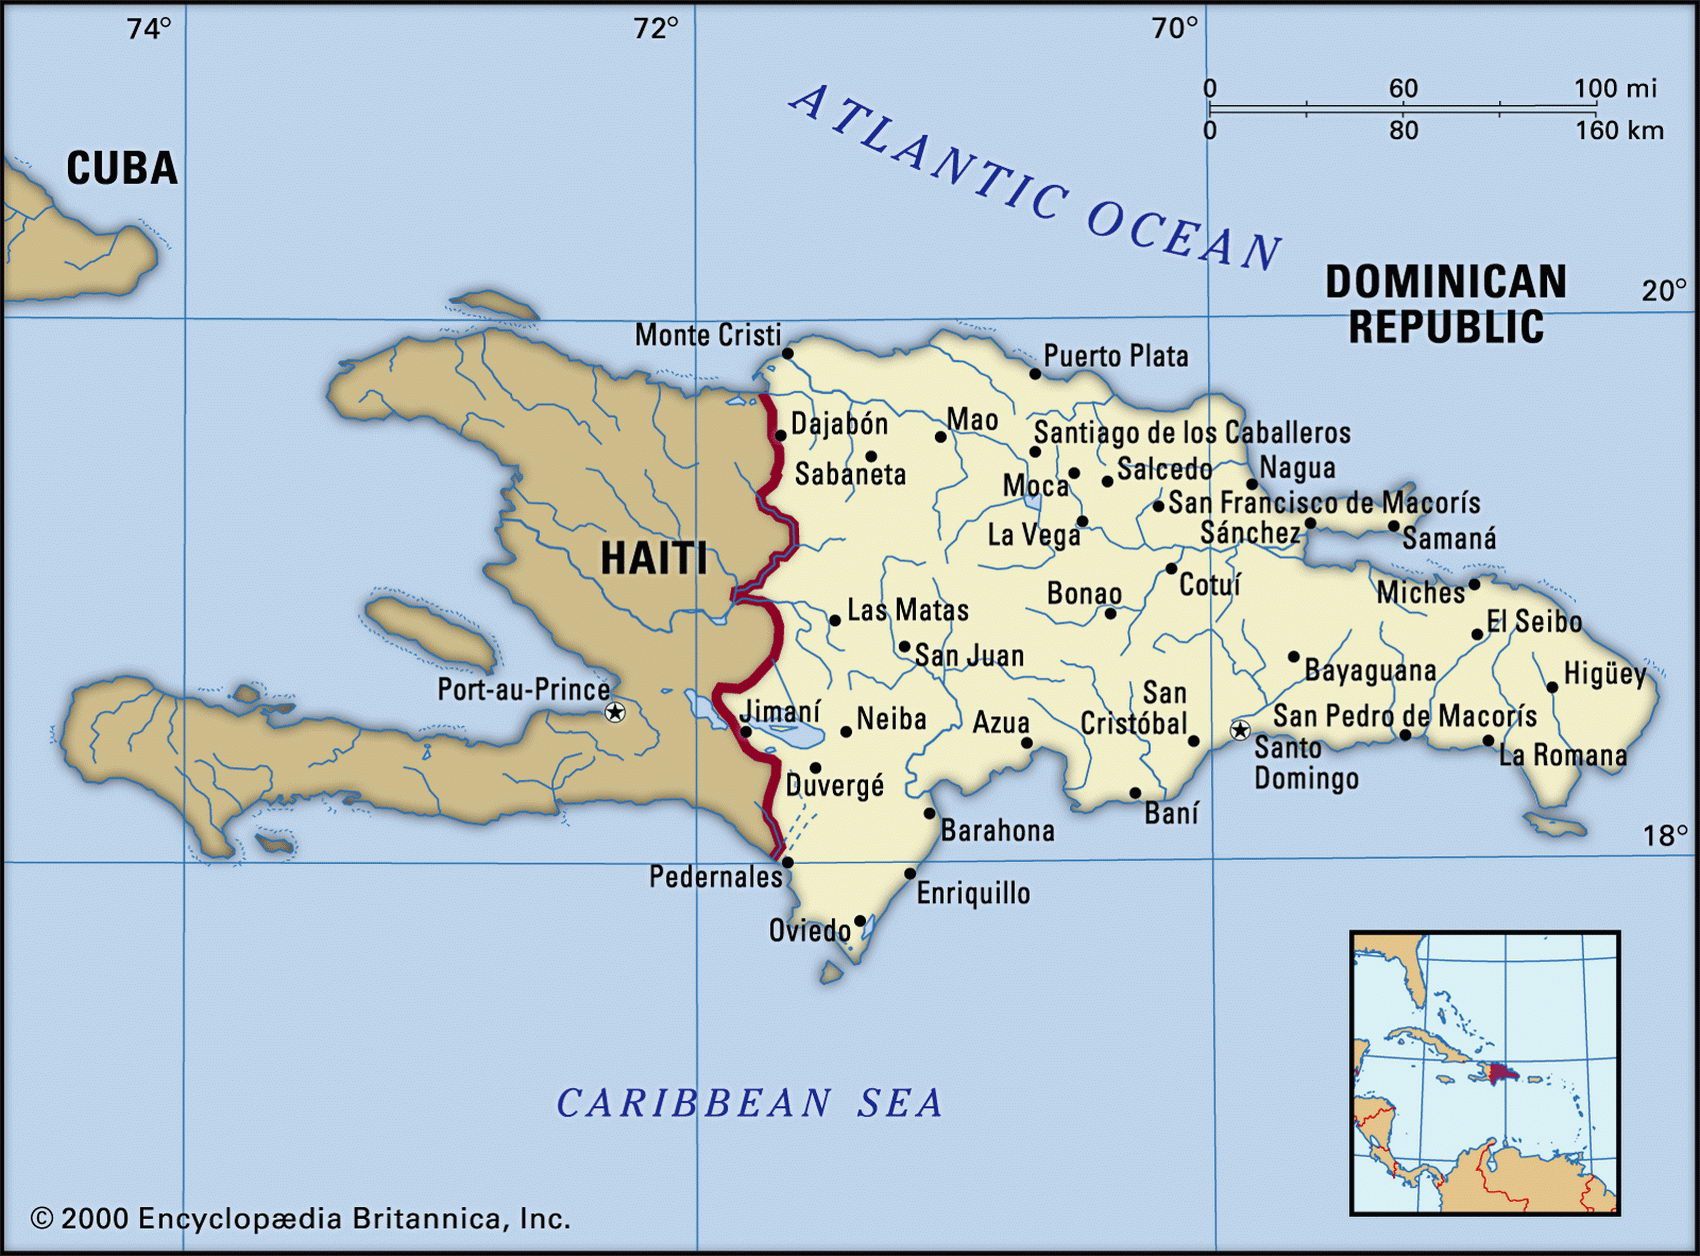 Dominican Republic map